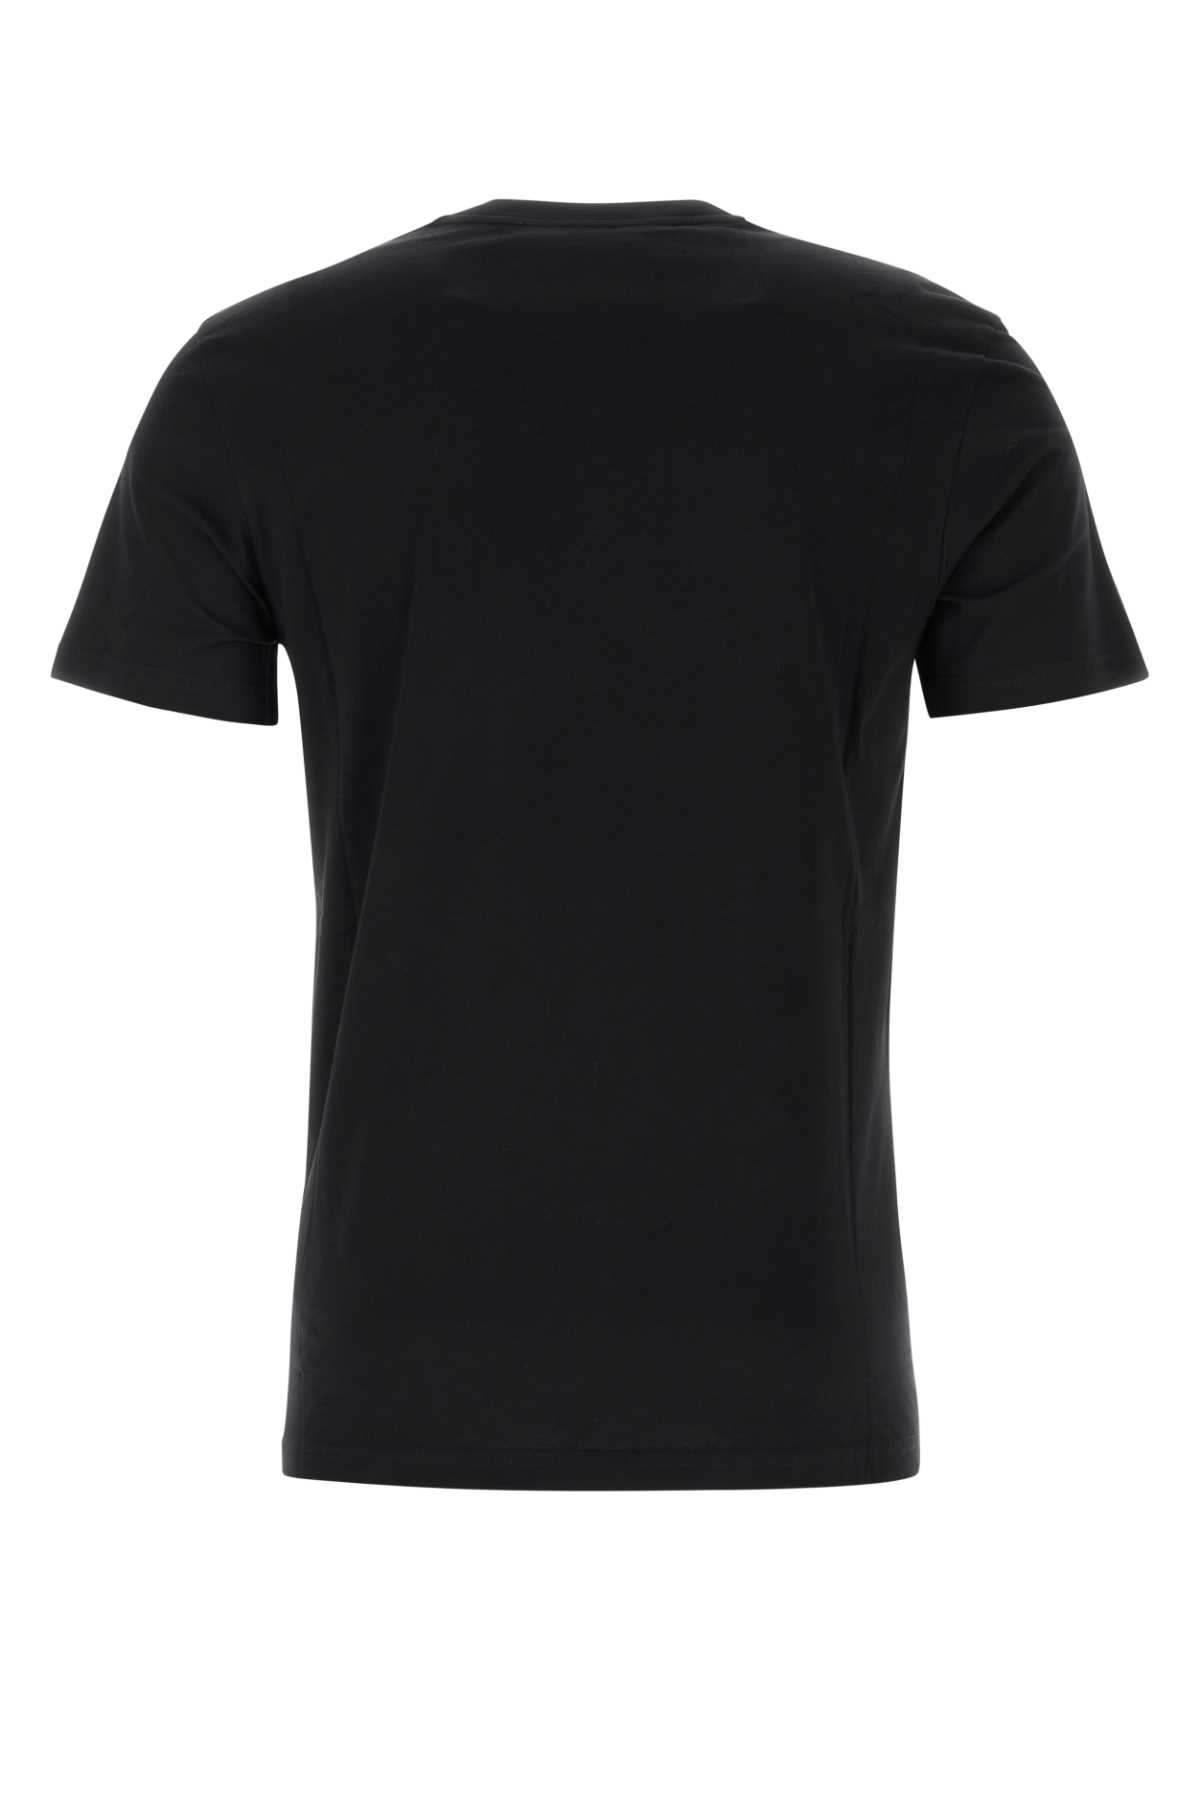 Moschino Black Cotton T-shirt In 0555